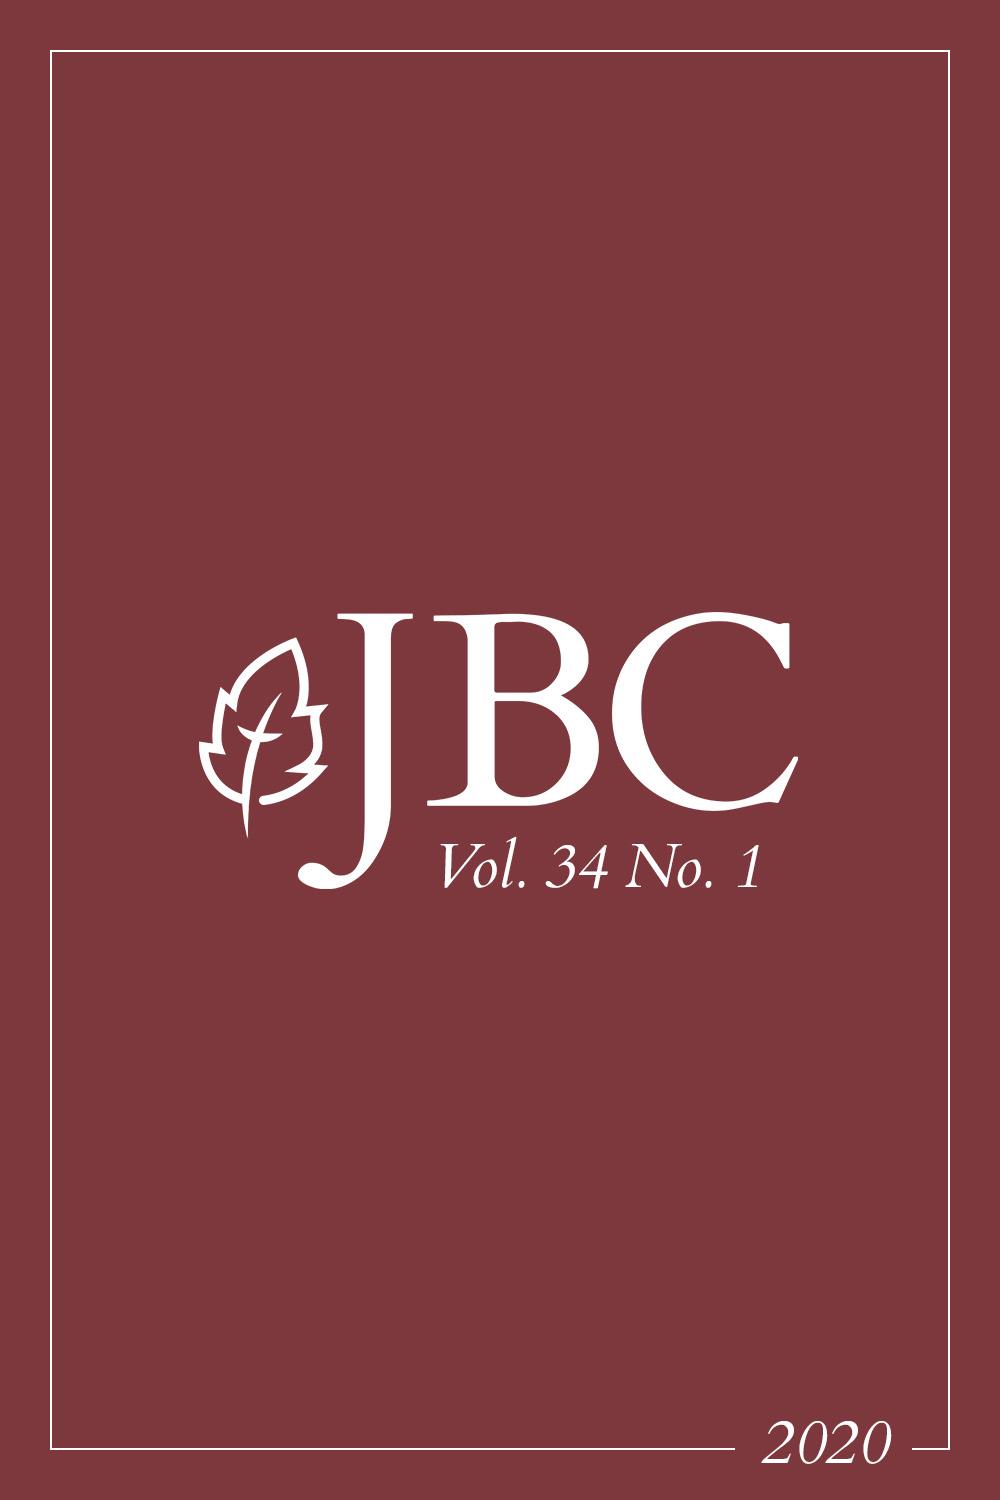 JBC Volume 34:1 (2020) PDF Featured Image